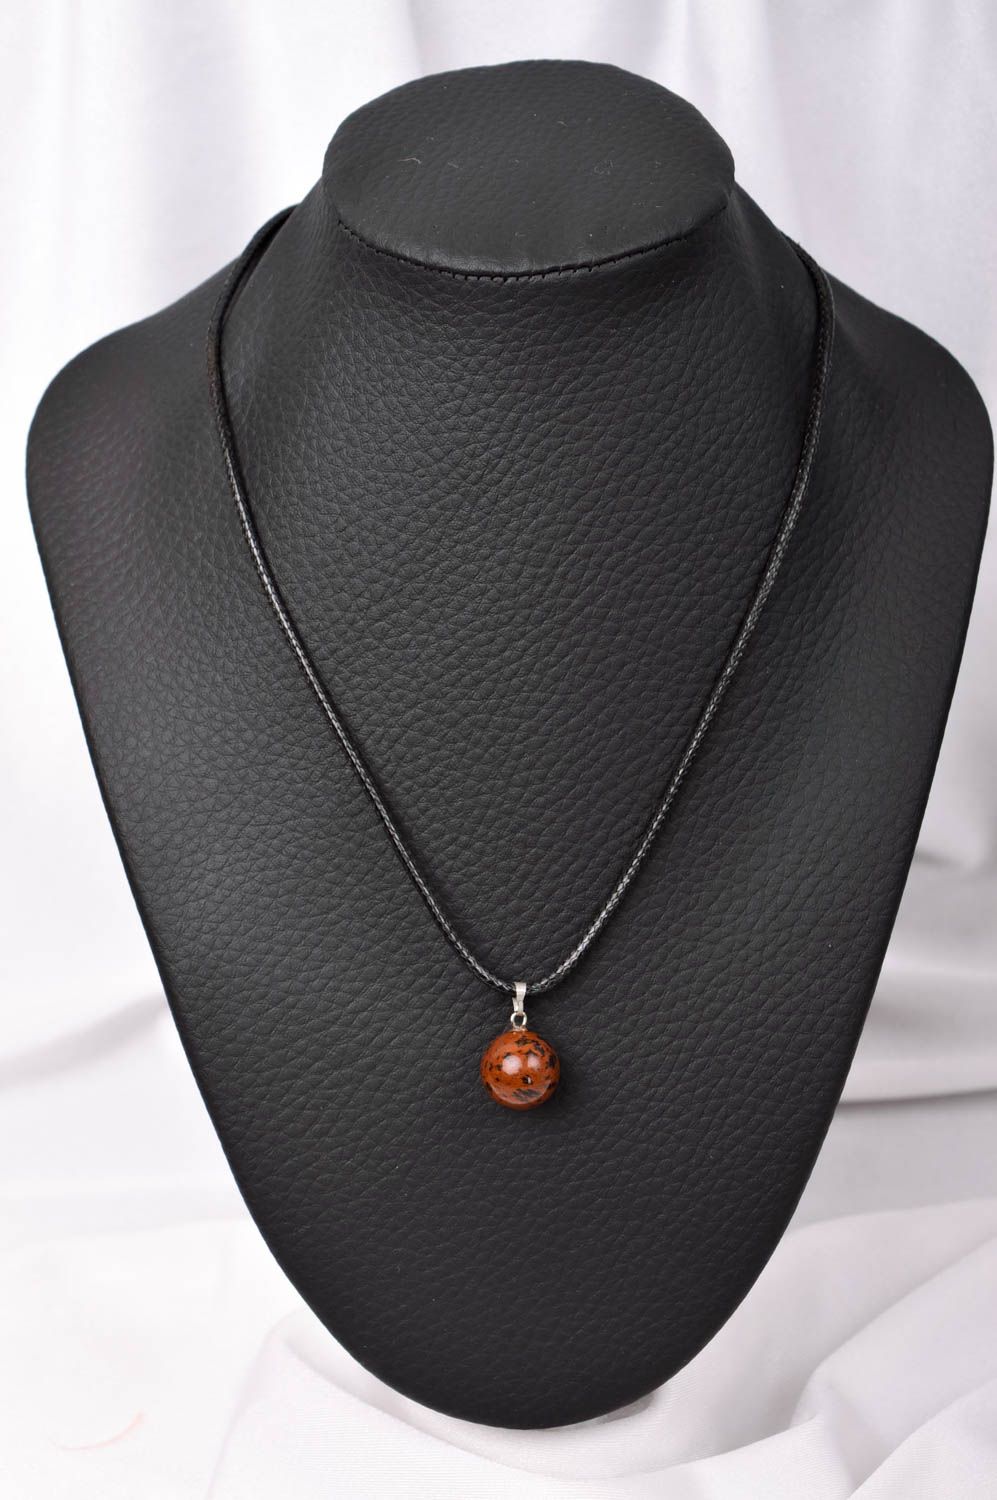 Handmade cord pendant with natural stone stylish jewelry handmade accessories  photo 4